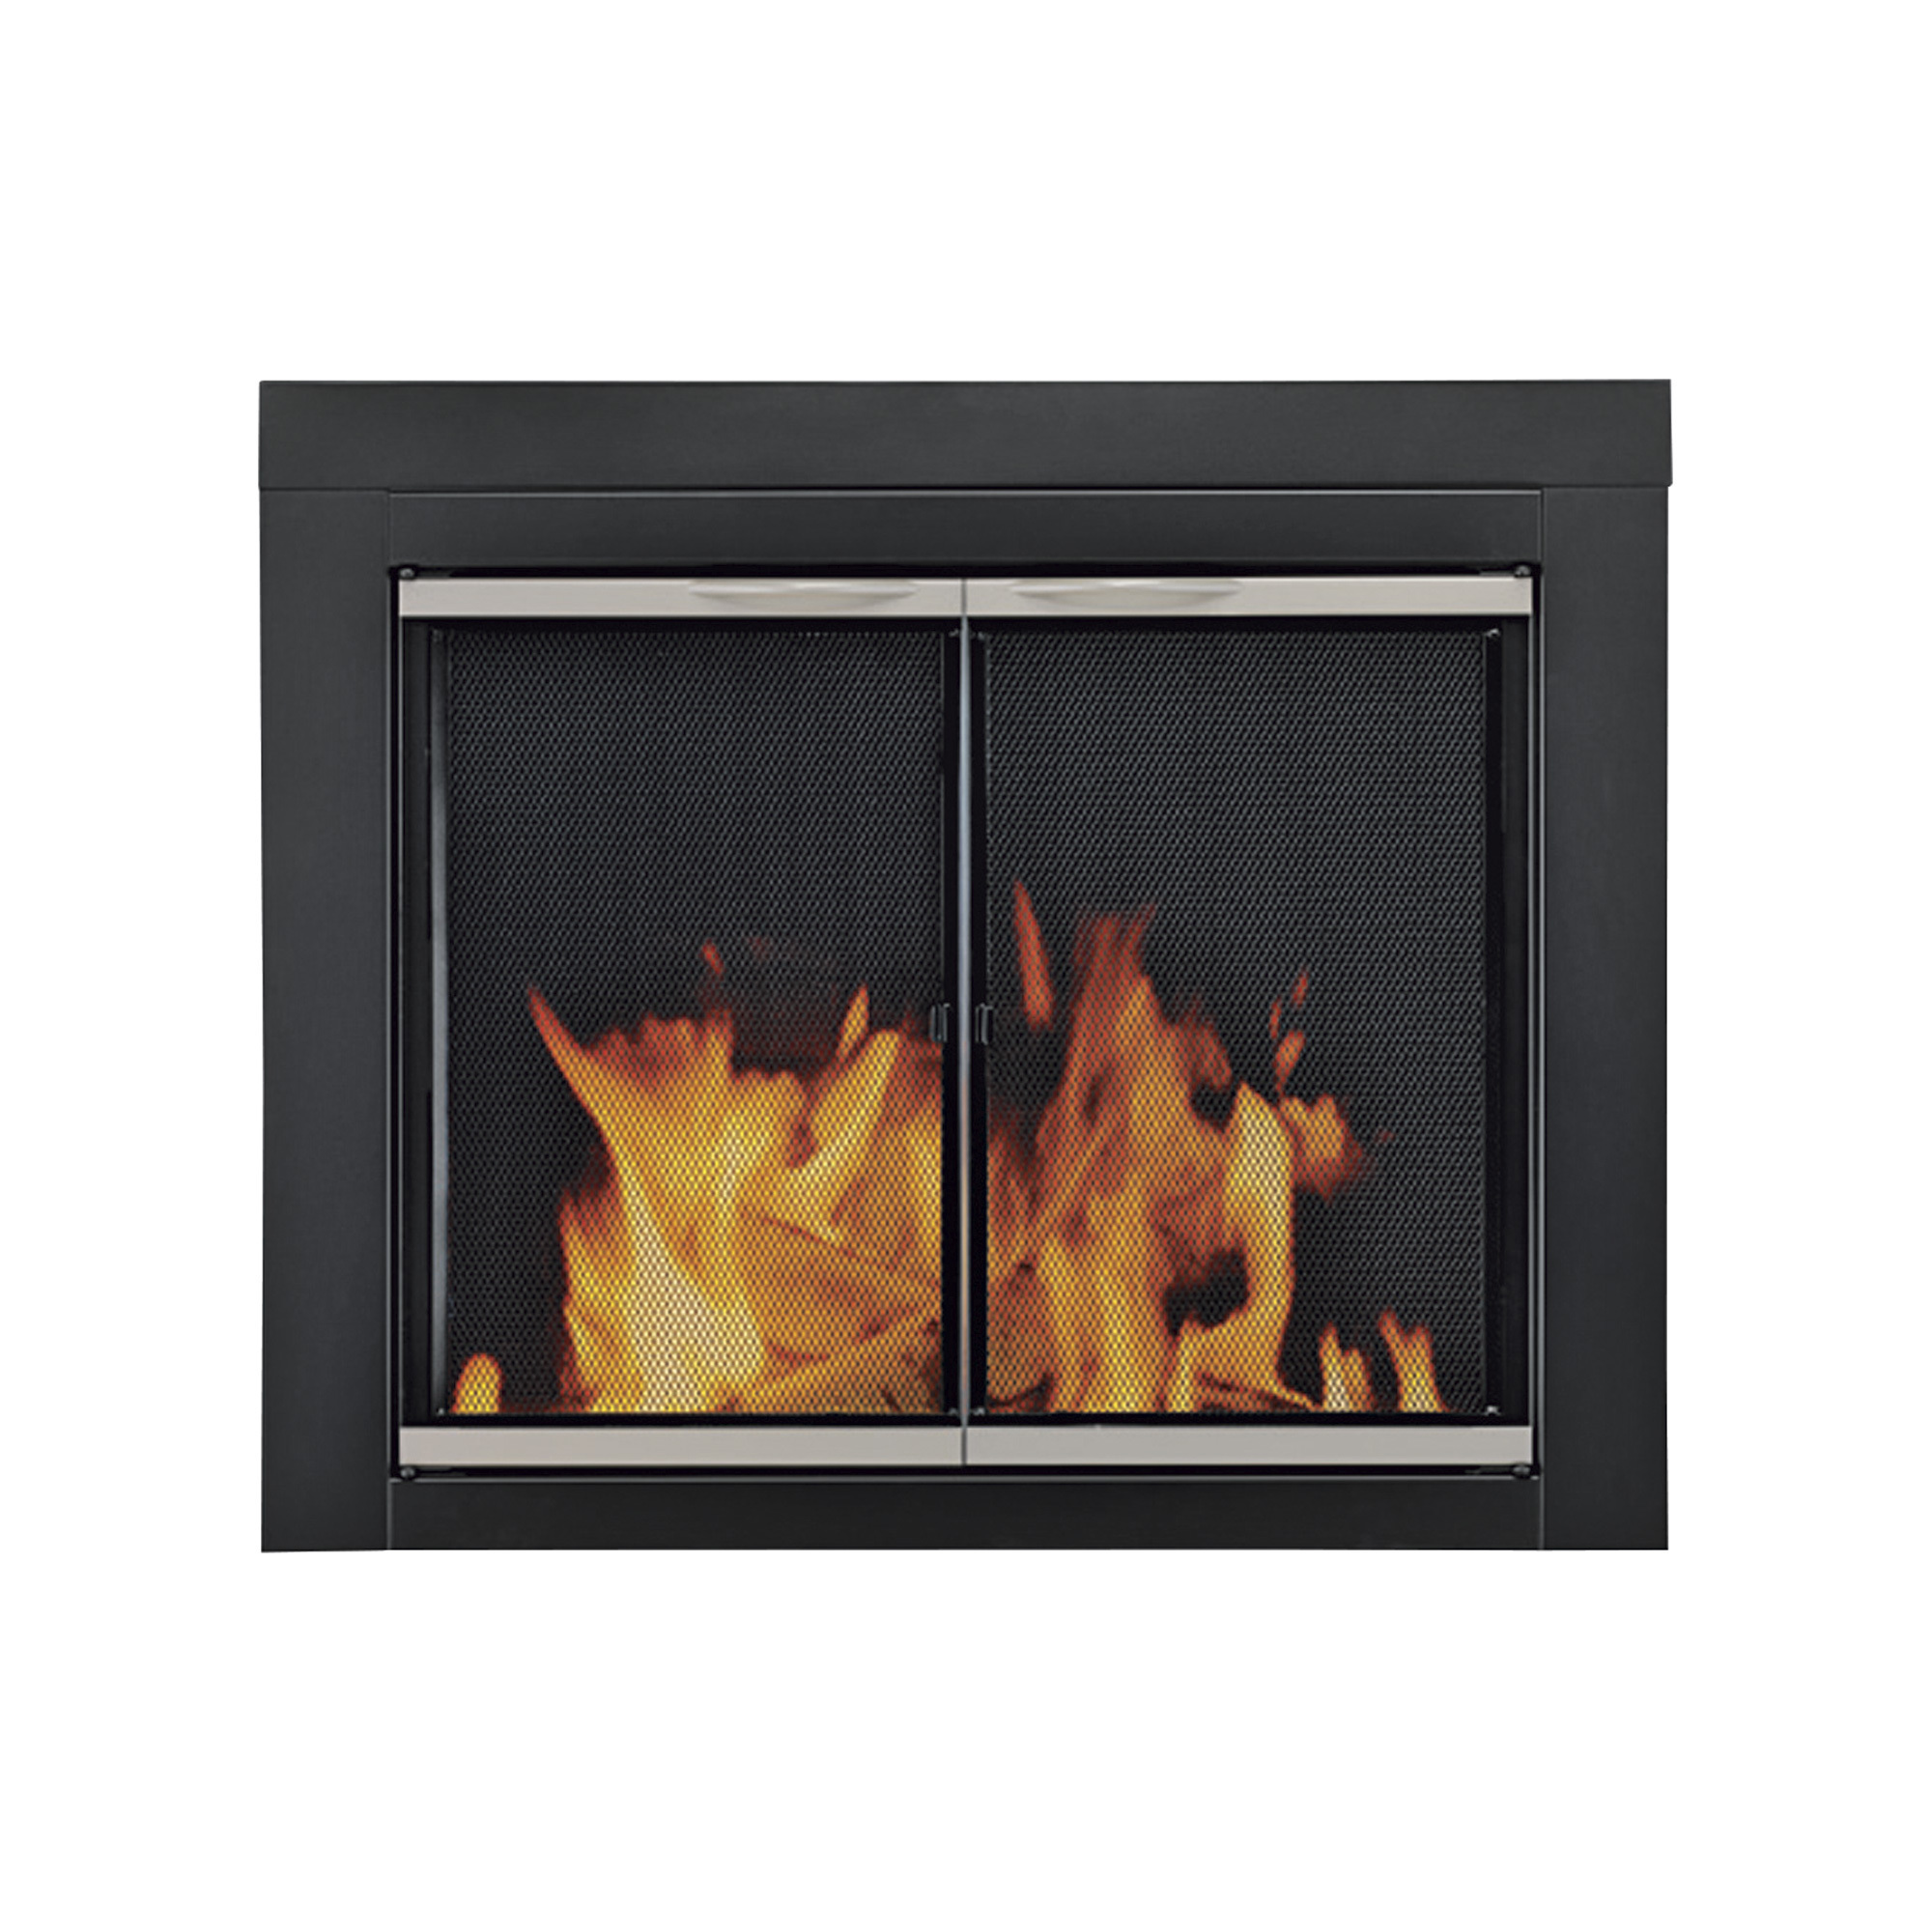 Alsip Fireplace Glass Door, For Masonry Fireplaces, Medium, Black with Satin Nickel Trim, Model AP-1131